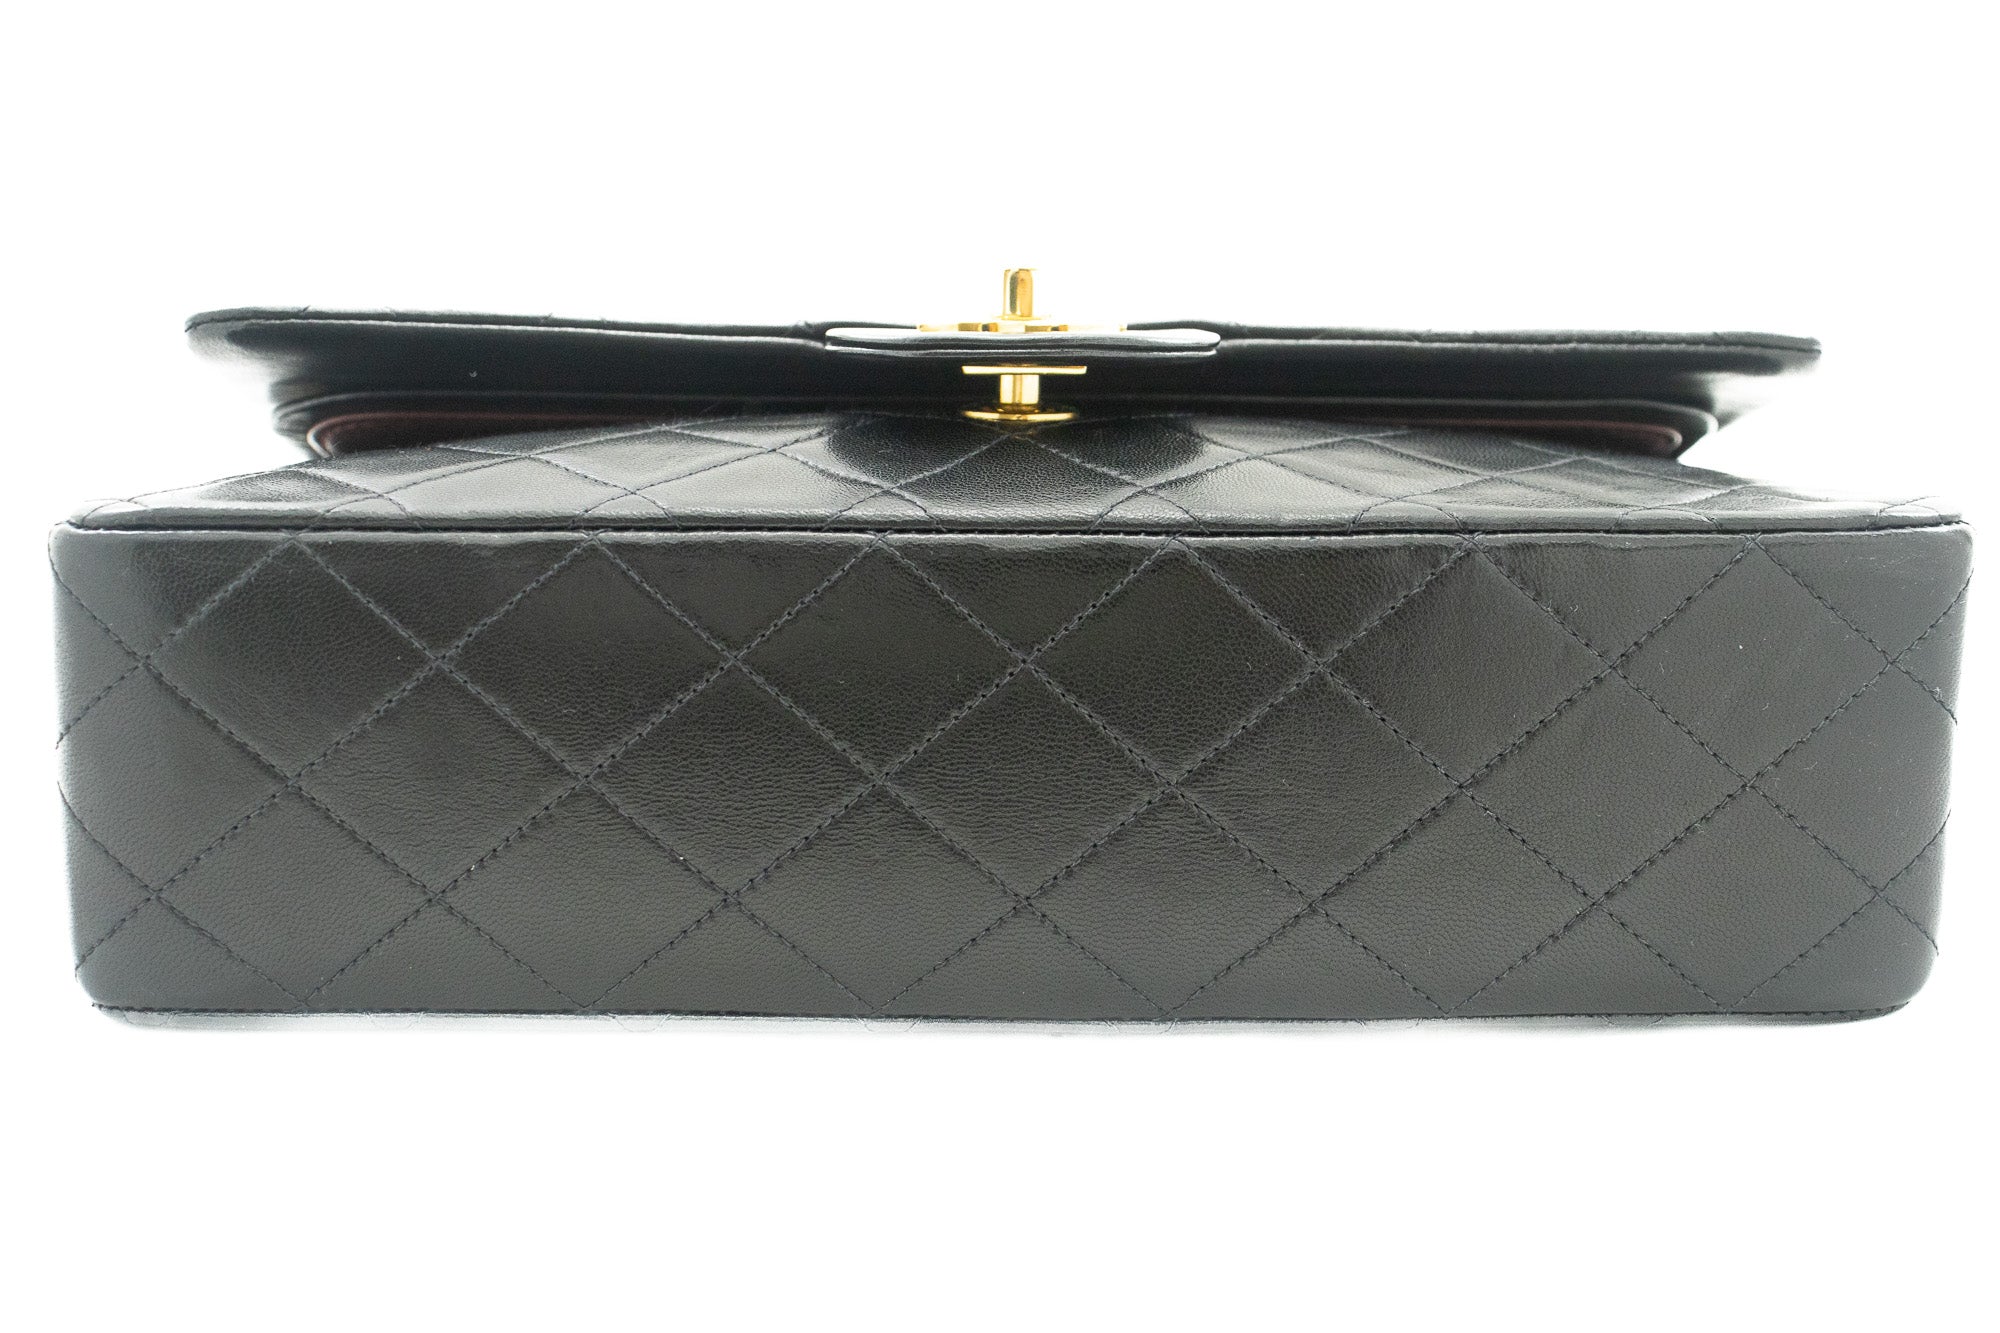 Chanel Classic Double Flap Medium Chain Shoulder Bag Black Lamb k79